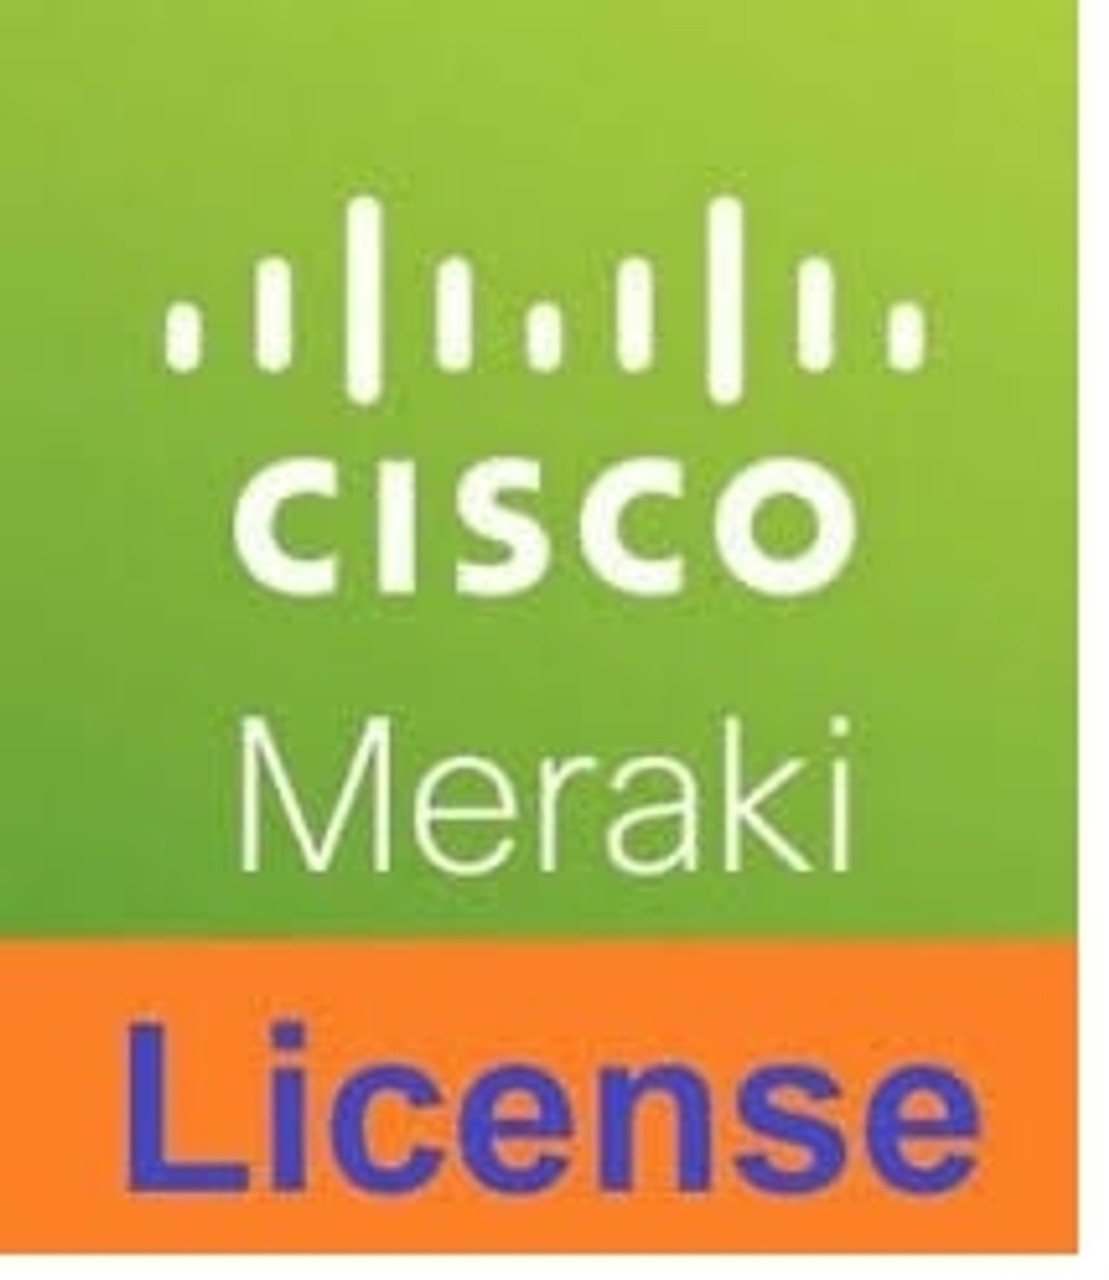 EOS Meraki MS22 Enterprise License and Support, 7 Year